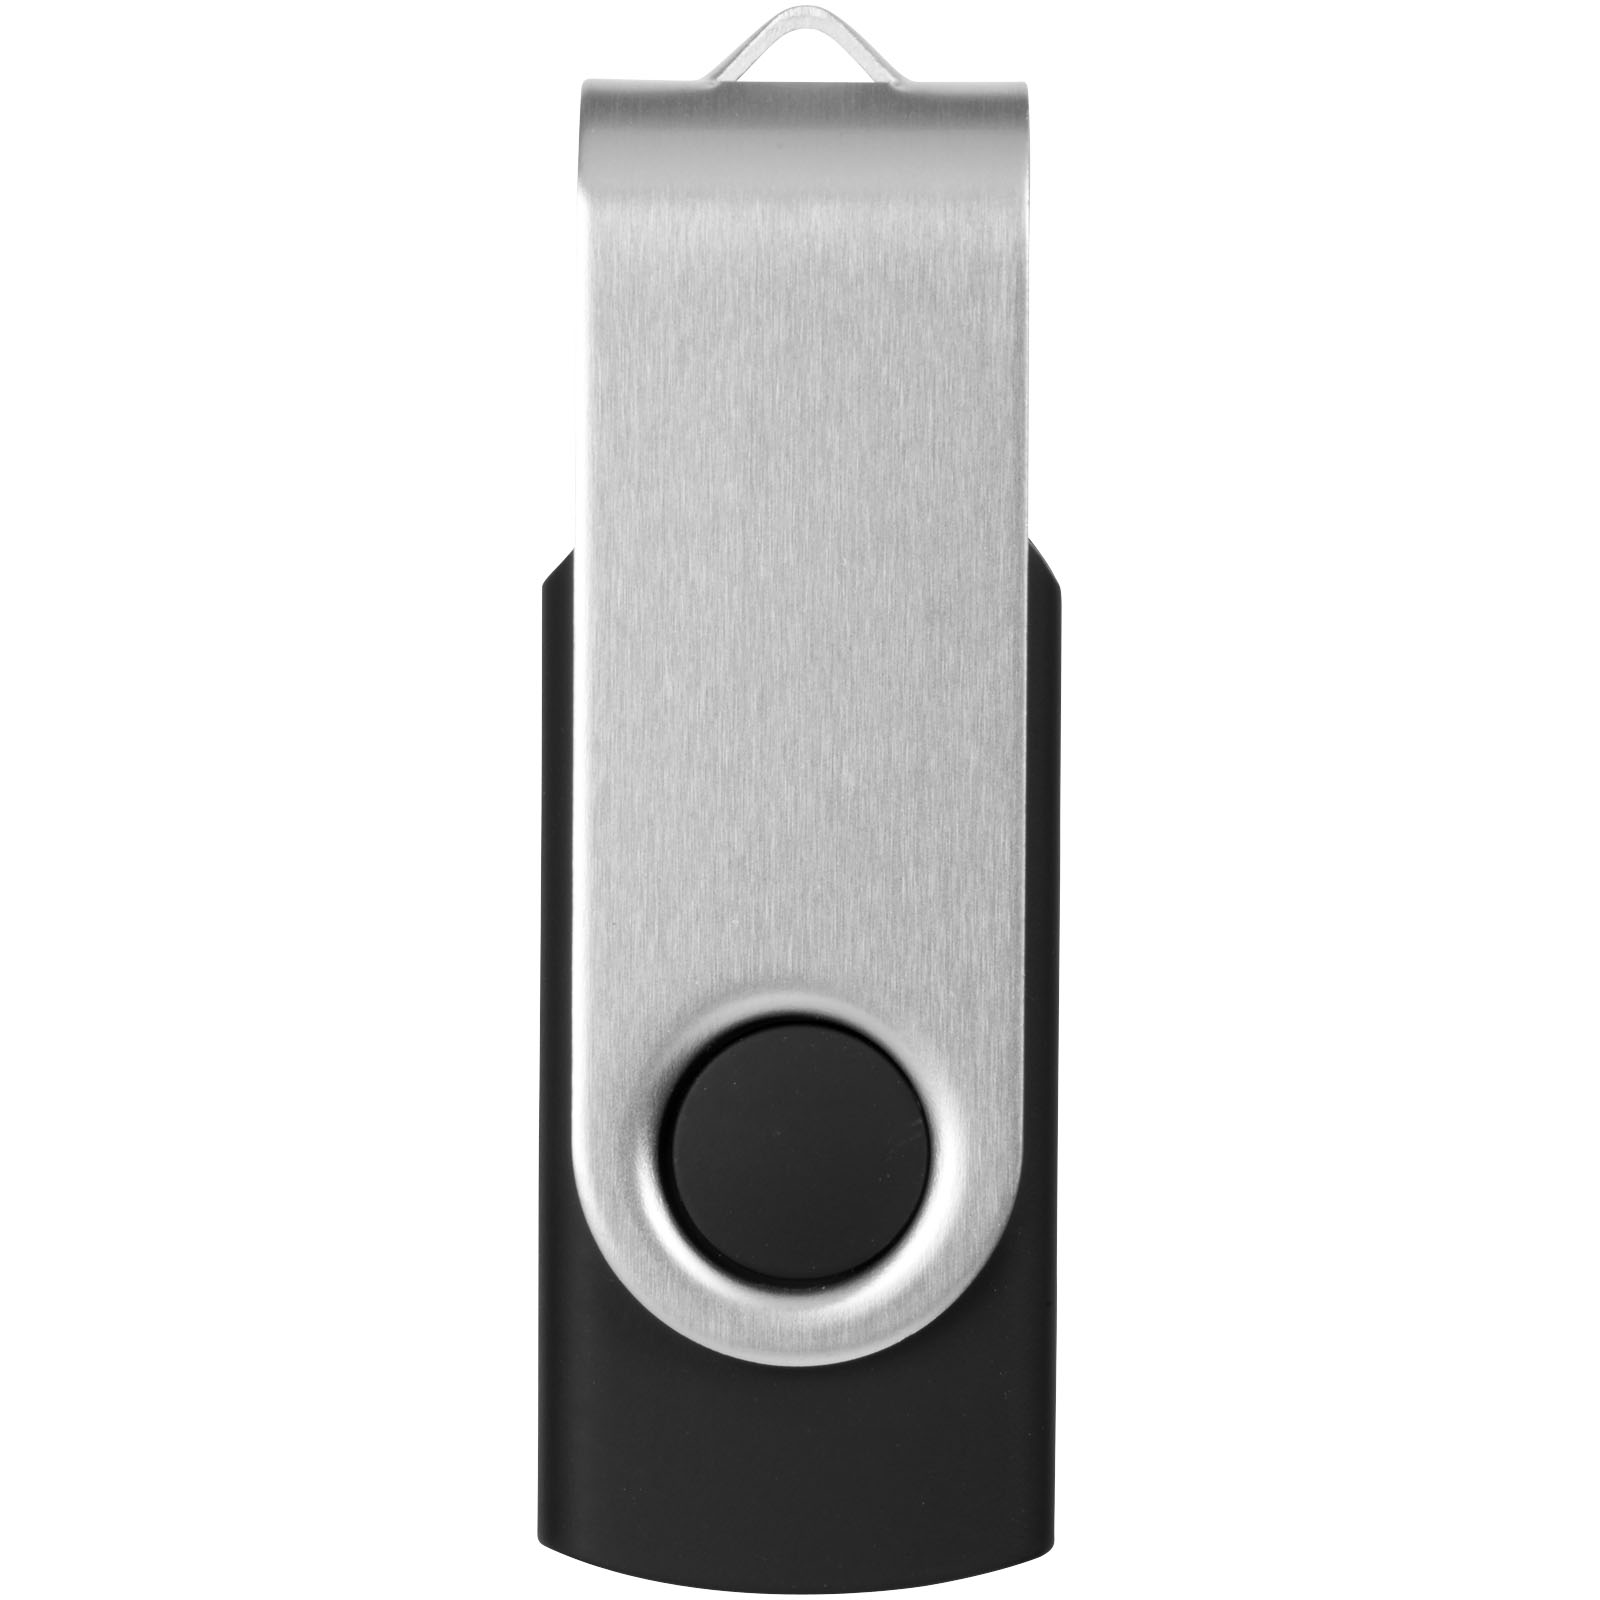 Advertising USB Flash Drives - Rotate-basic 16GB USB flash drive - 3